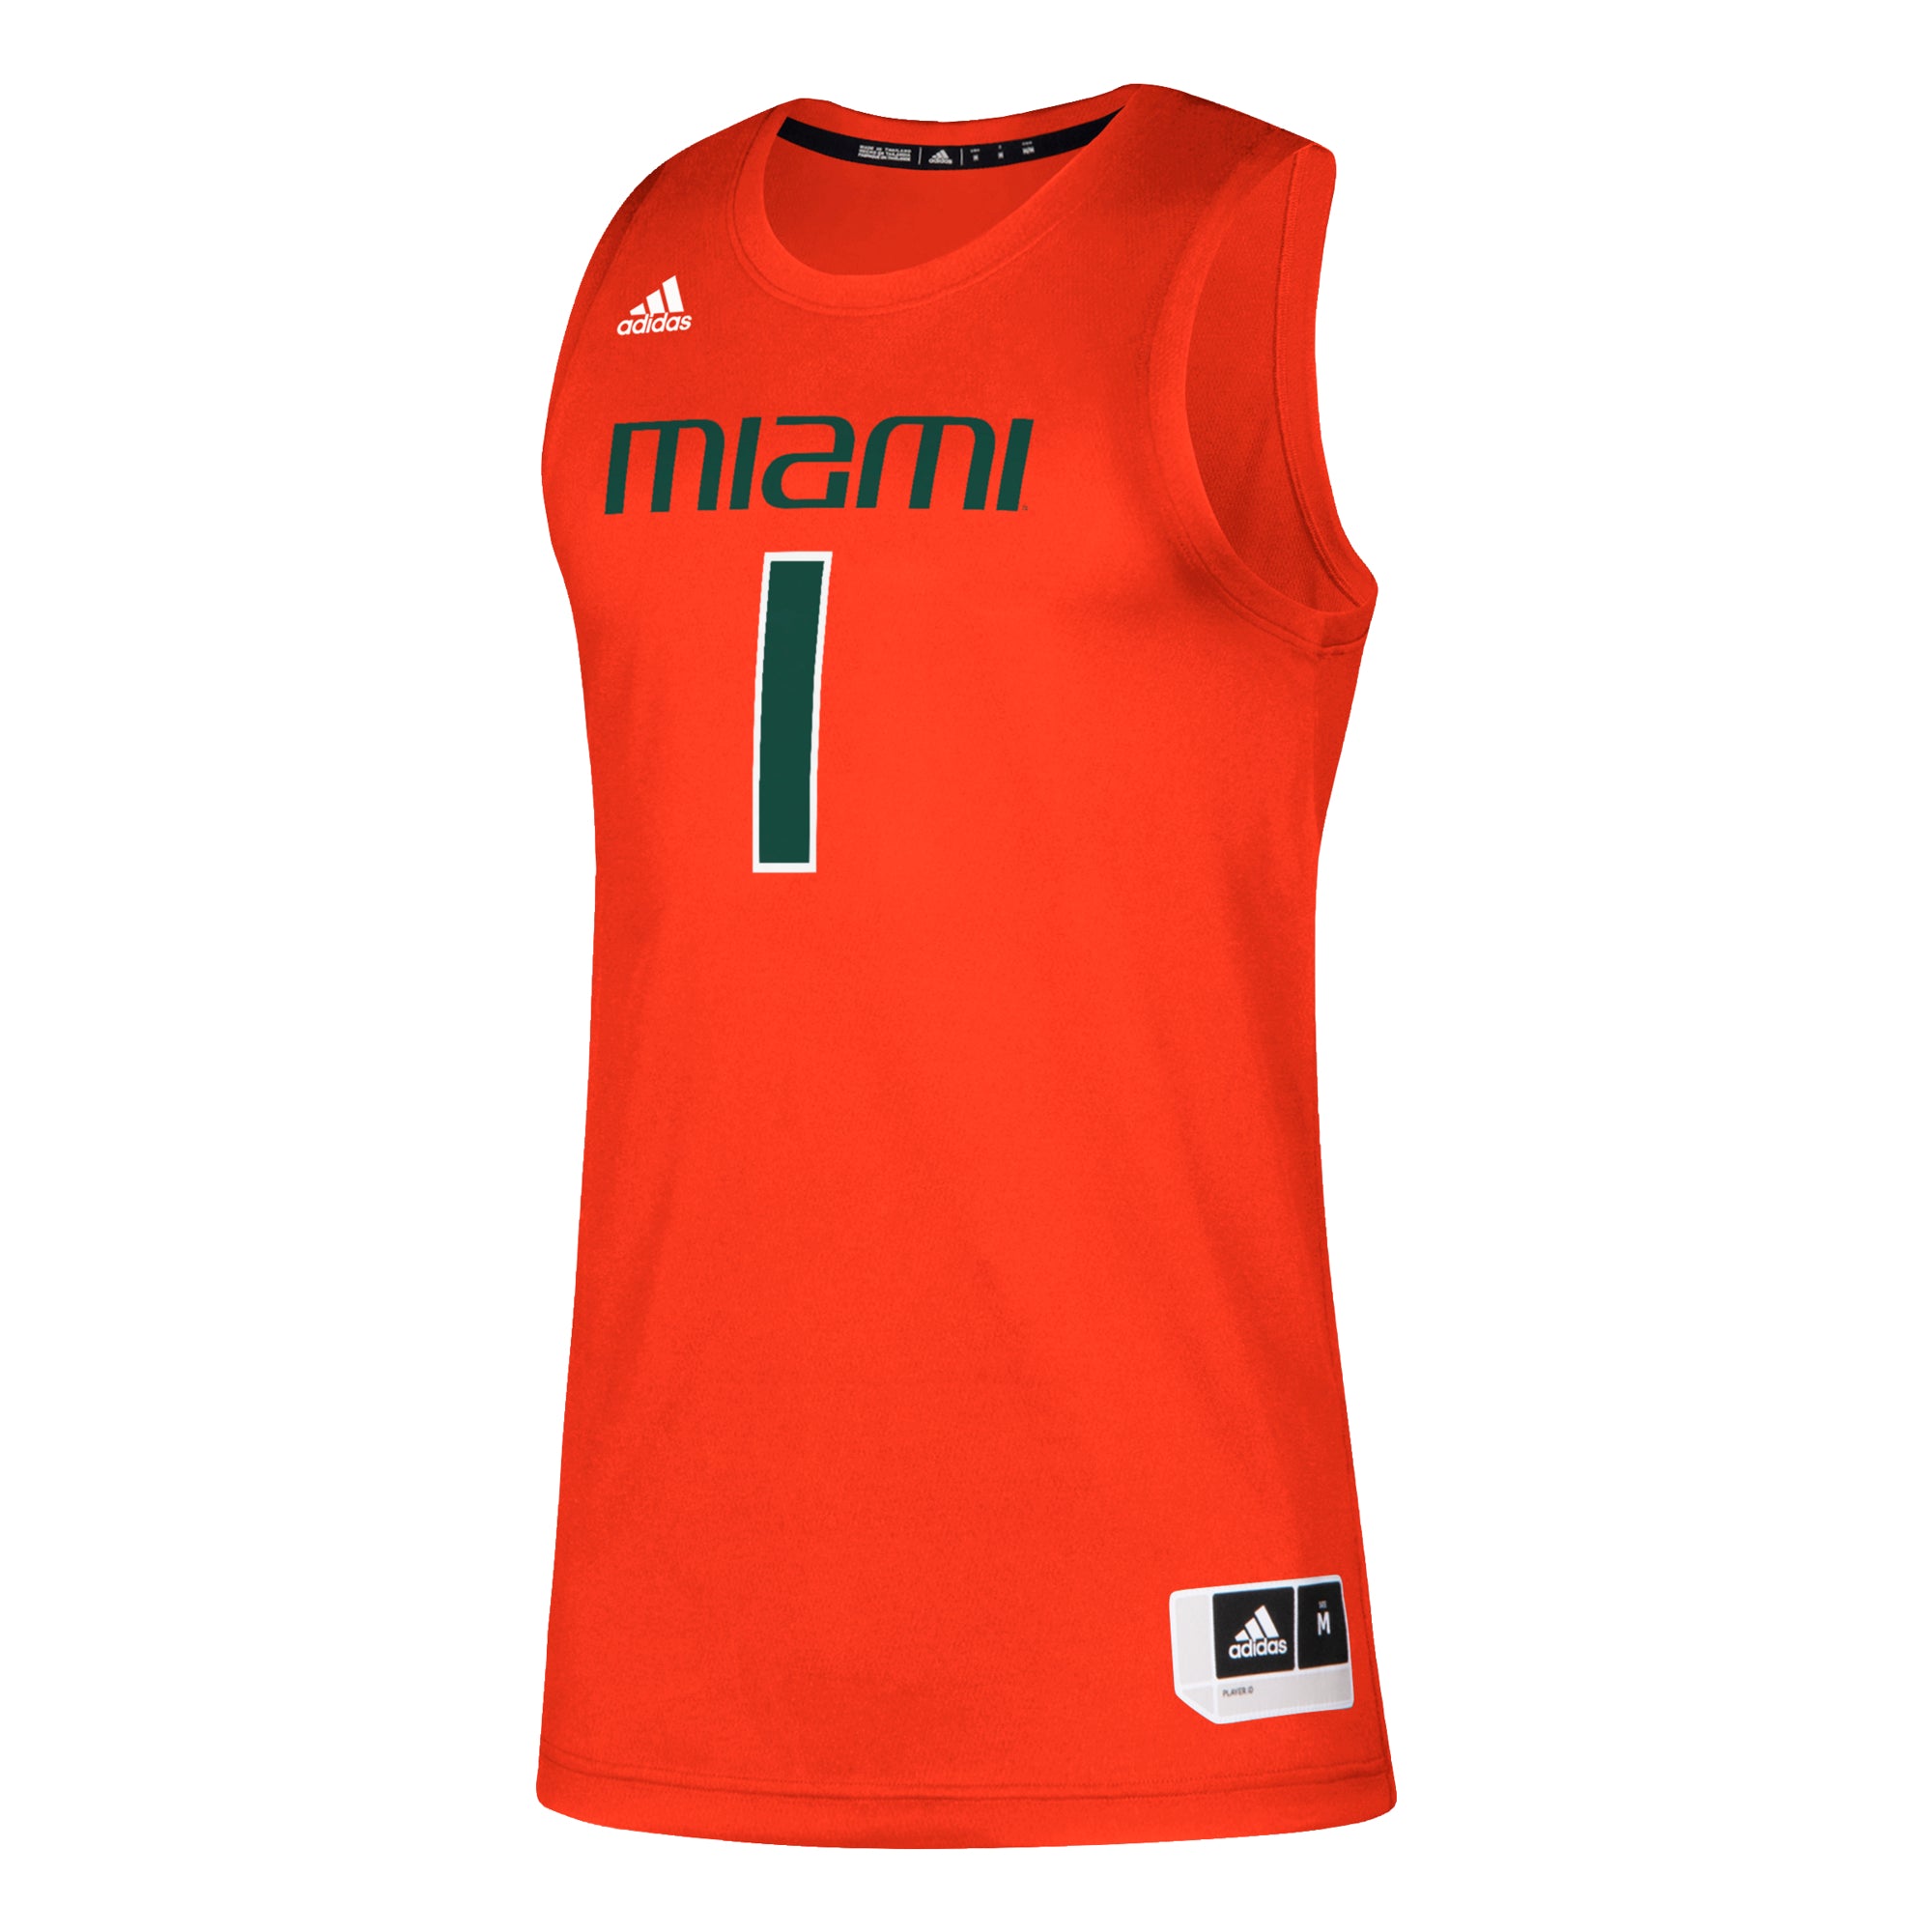 Miami Hurricanes adidas Swingman Basketball Jersey - Orange